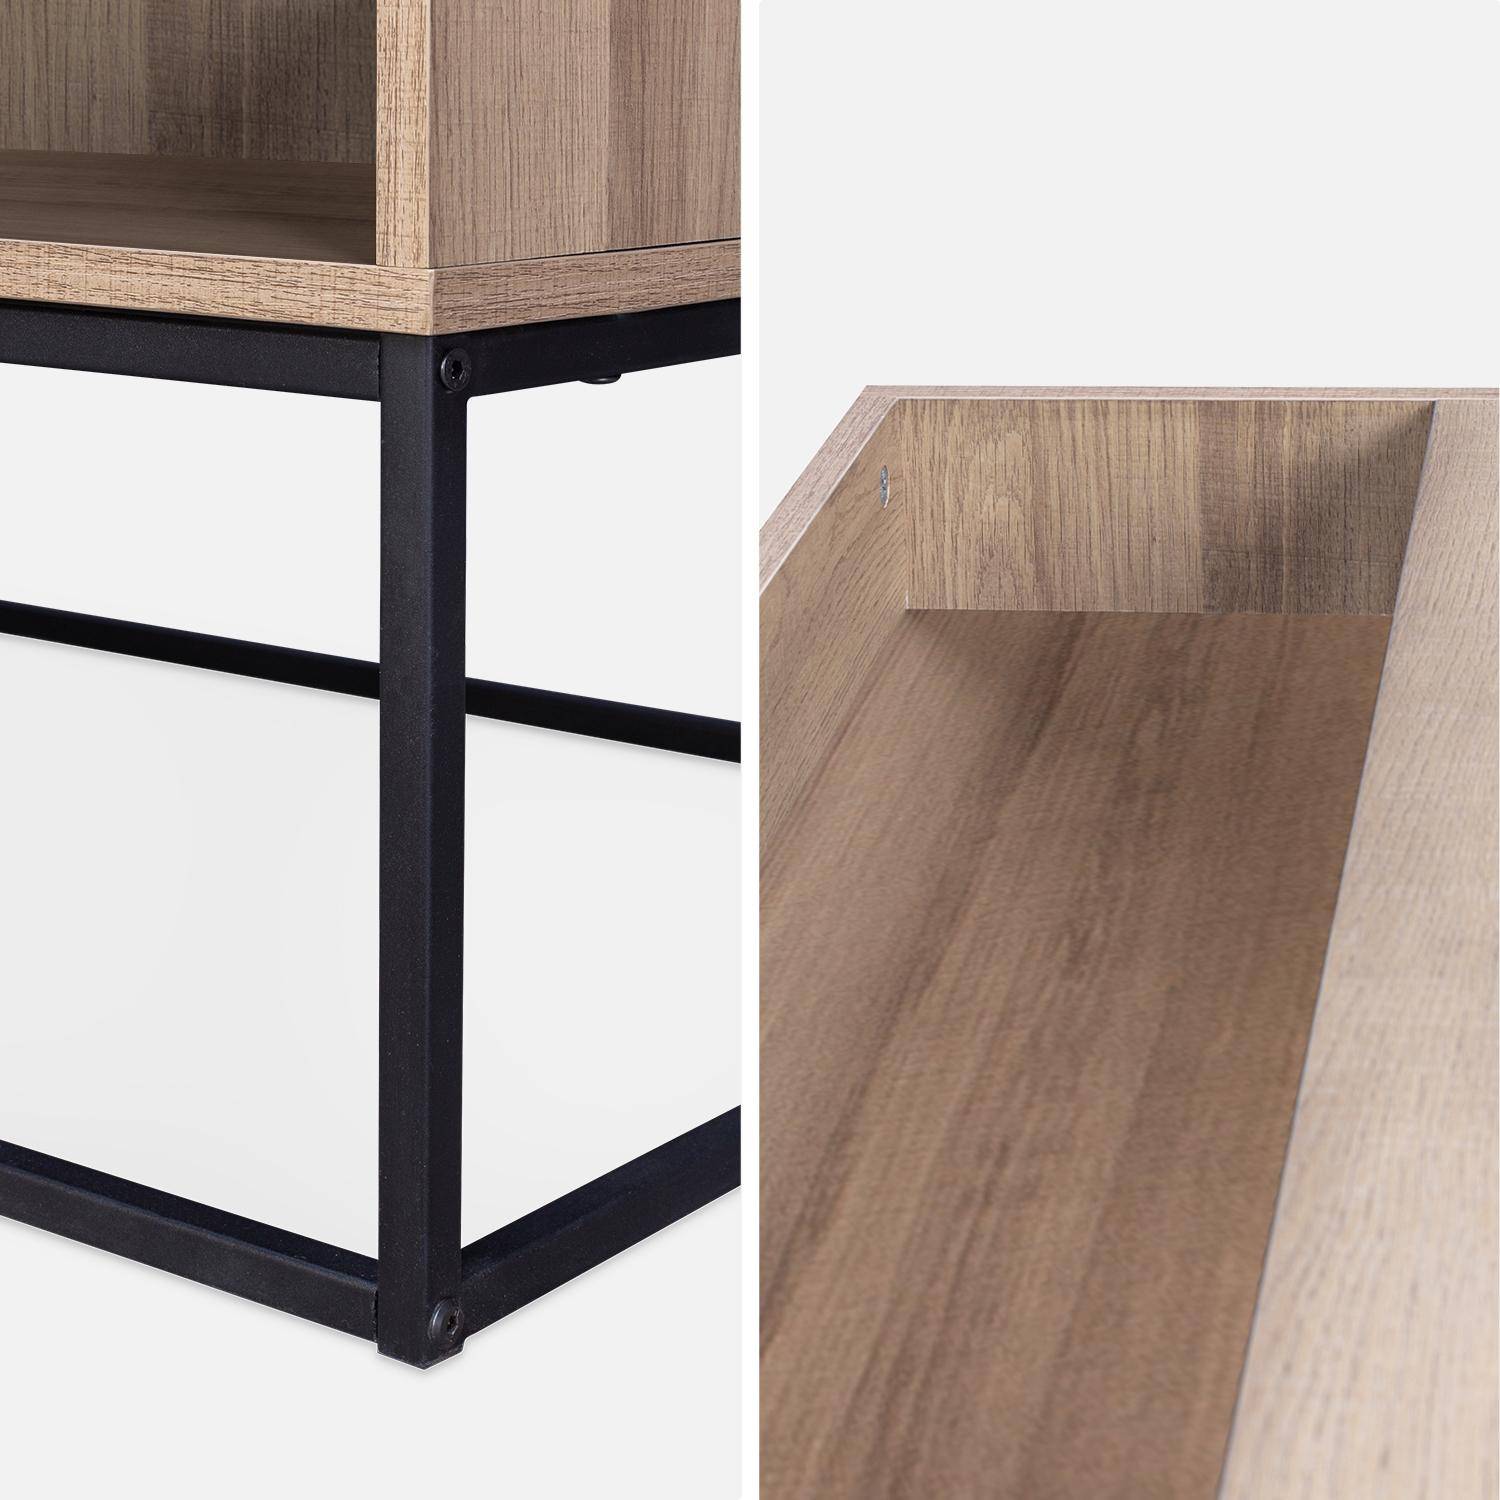 Metal and wood-effect coffee table, 120x59x34.5cm, Magnus, Black,sweeek,Photo5